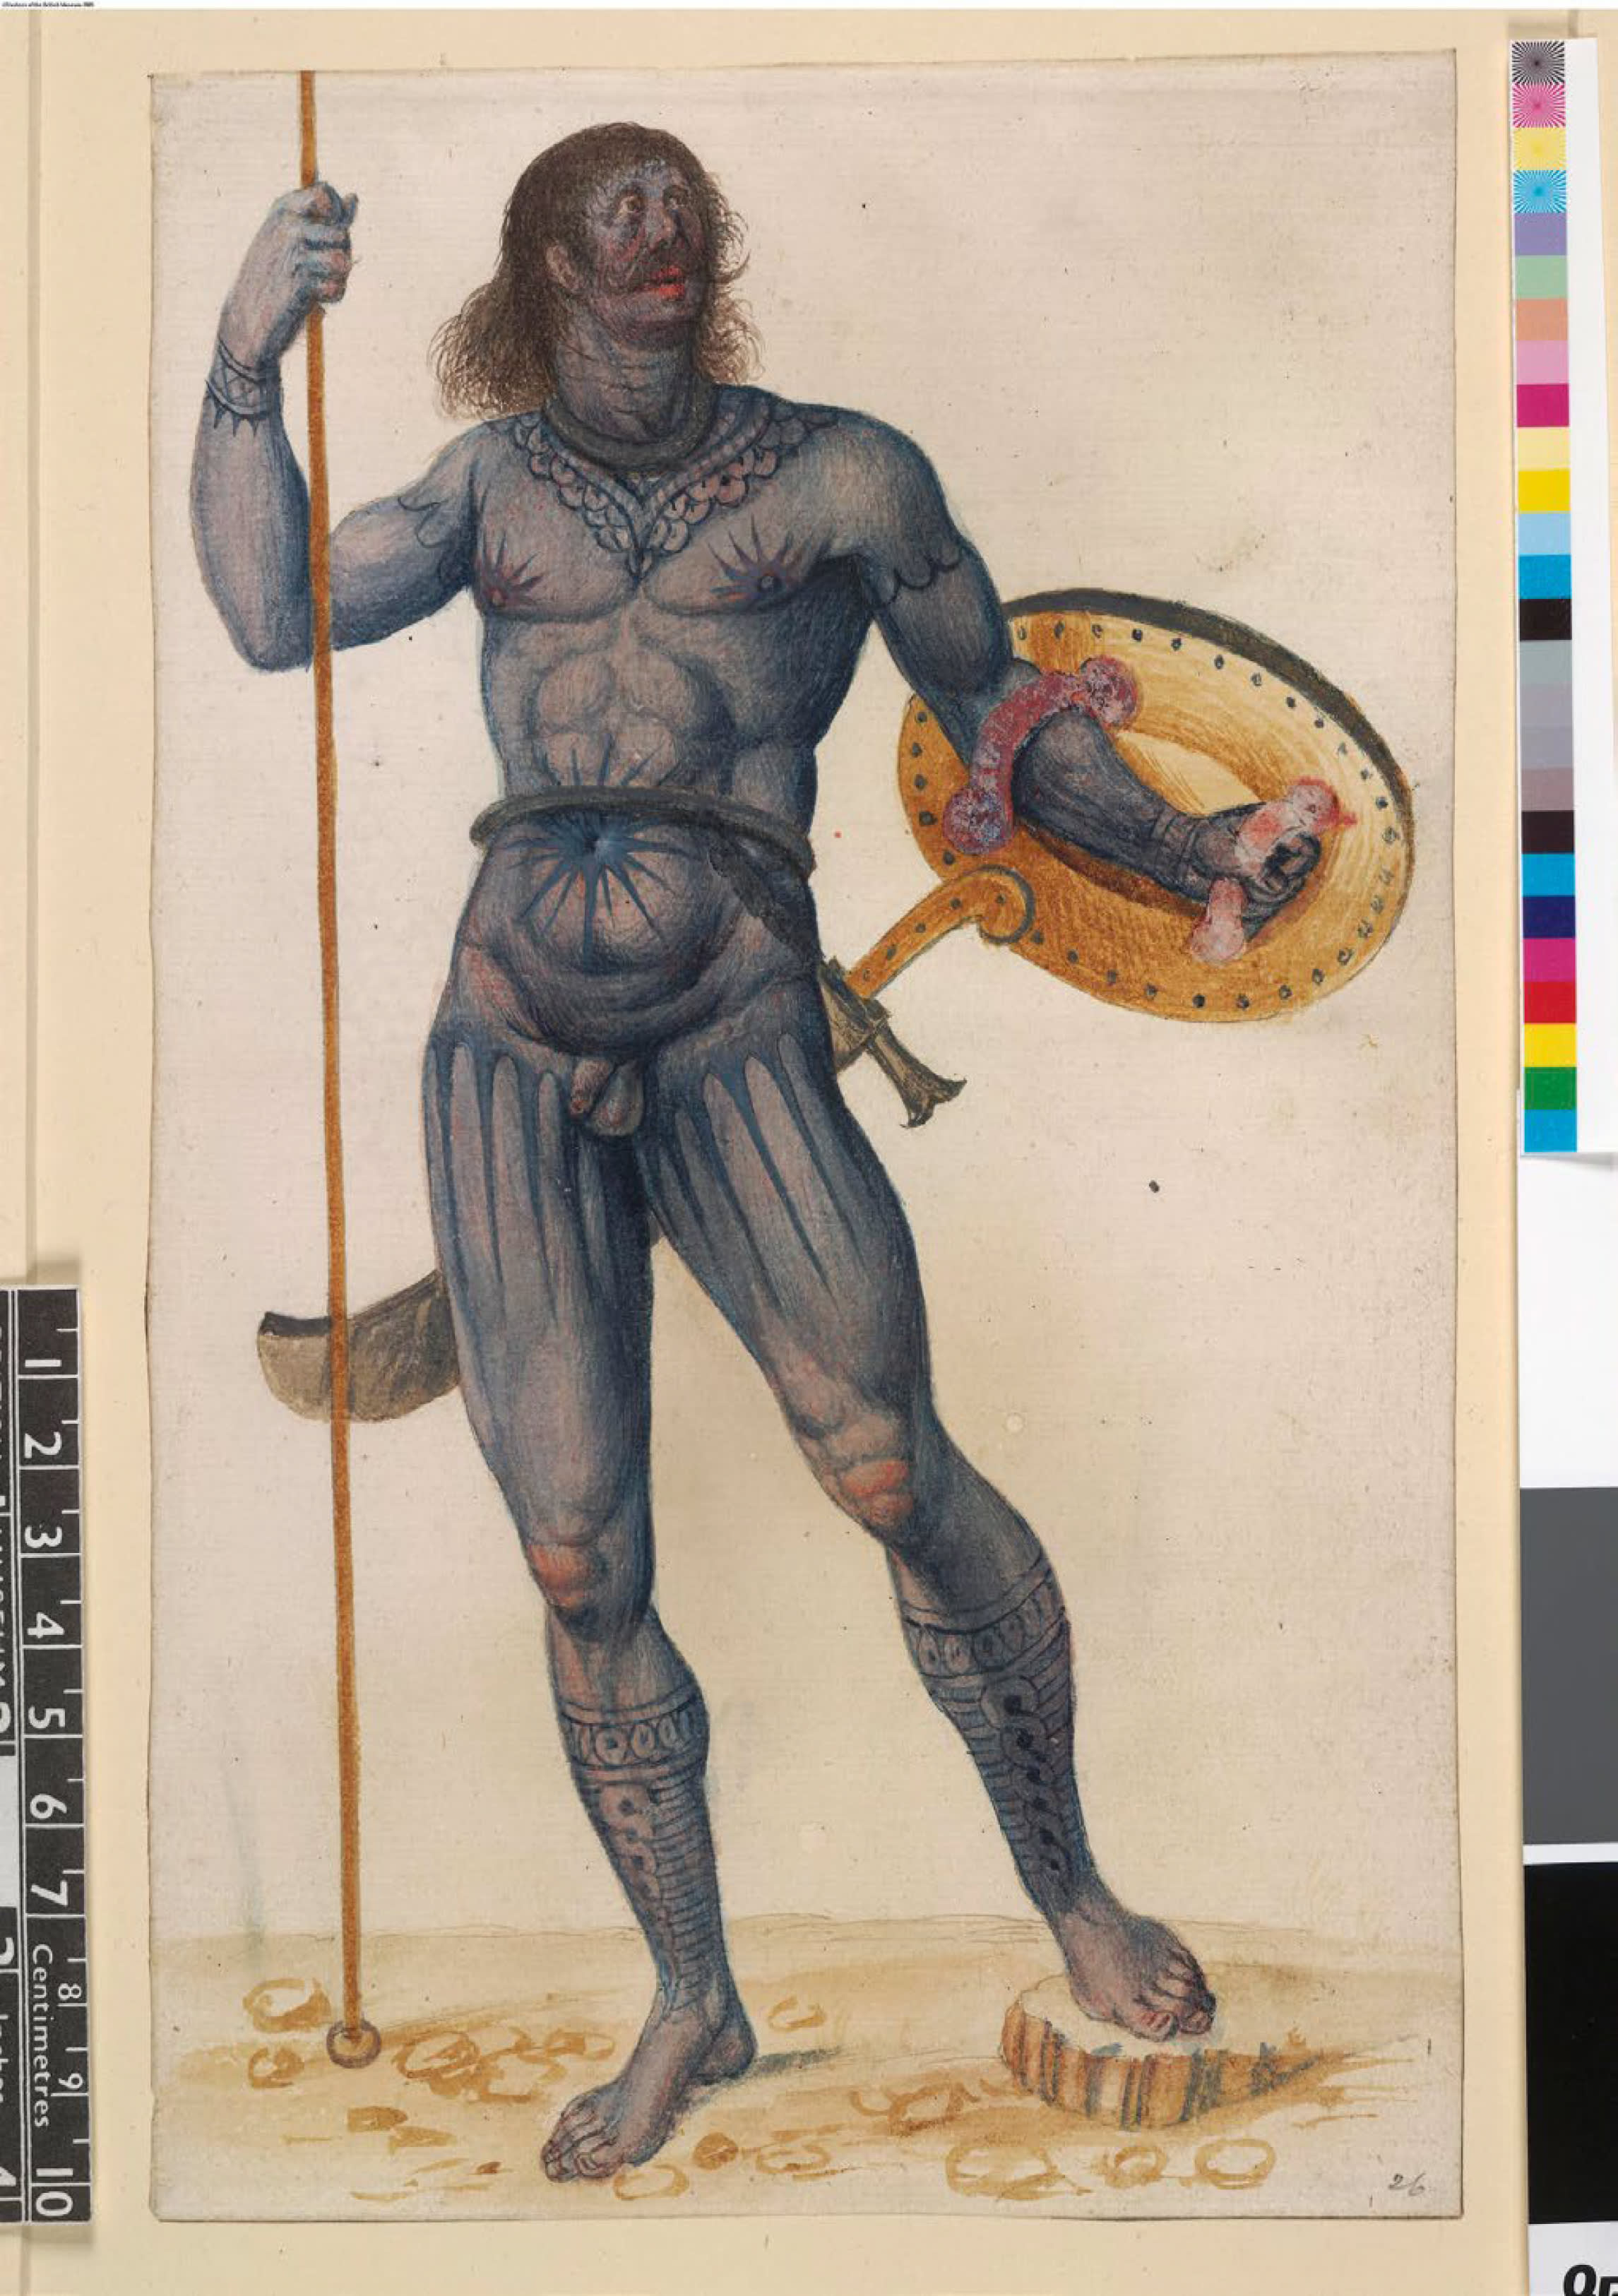 4.-John-White,-drawing,-1585-1593-A-Pict-warrior.jpg